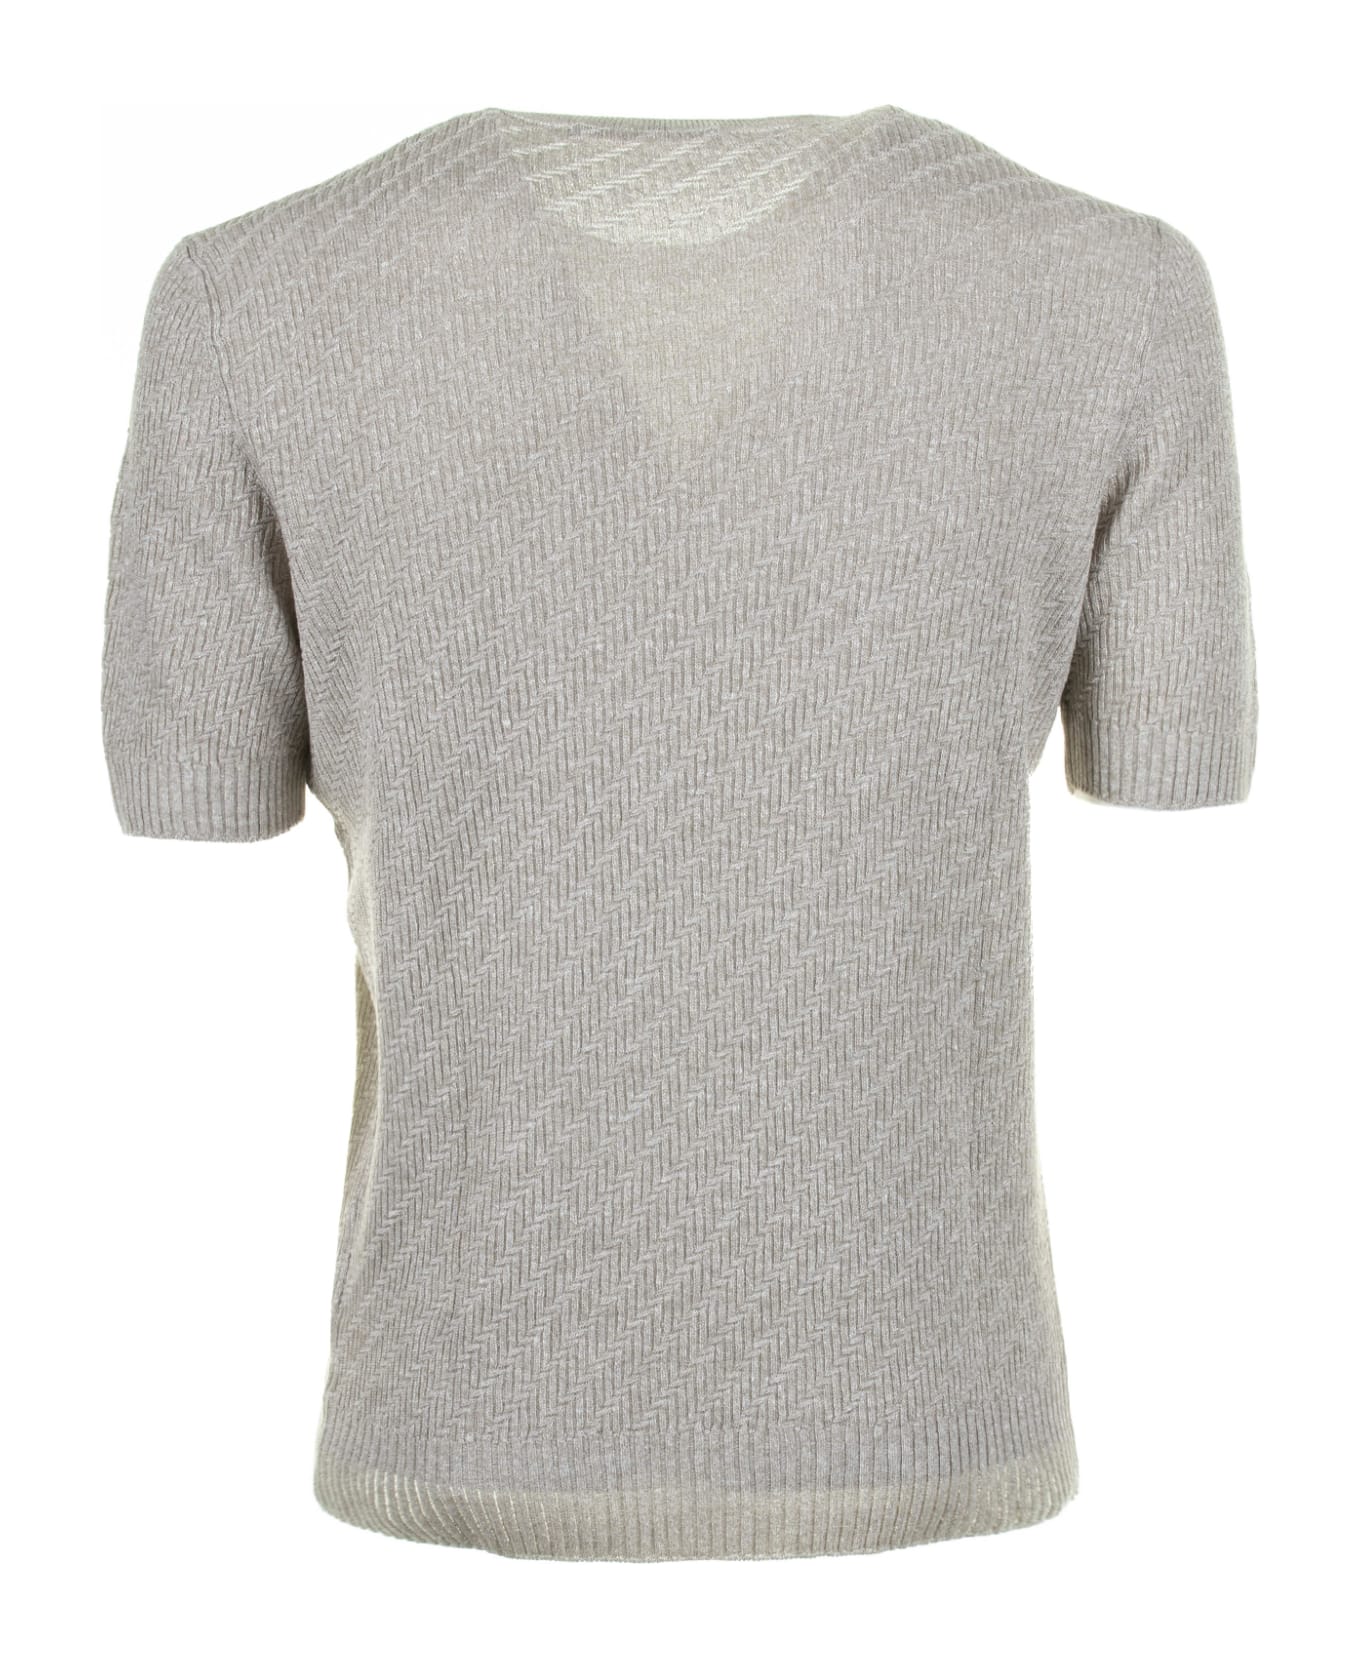 Tagliatore Beige Knitted T-shirt - BEIGE